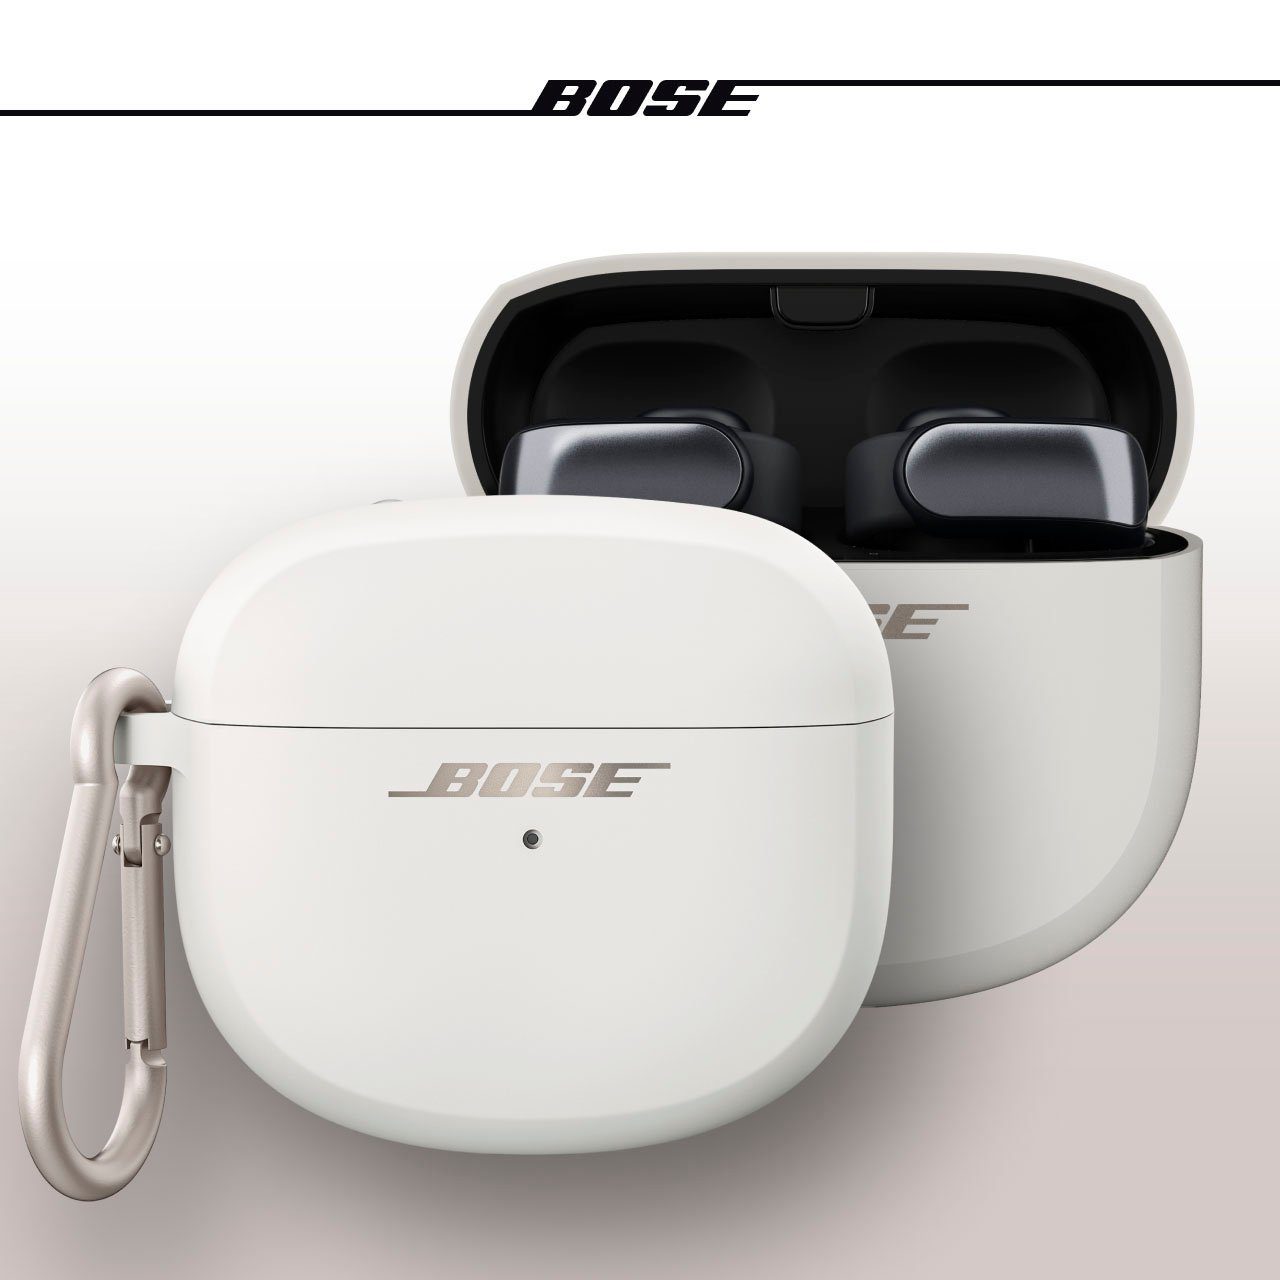 Bose Silikon-Schutzhülle für das Ultra Open Earbuds Wireless Charging Case Ladeschale